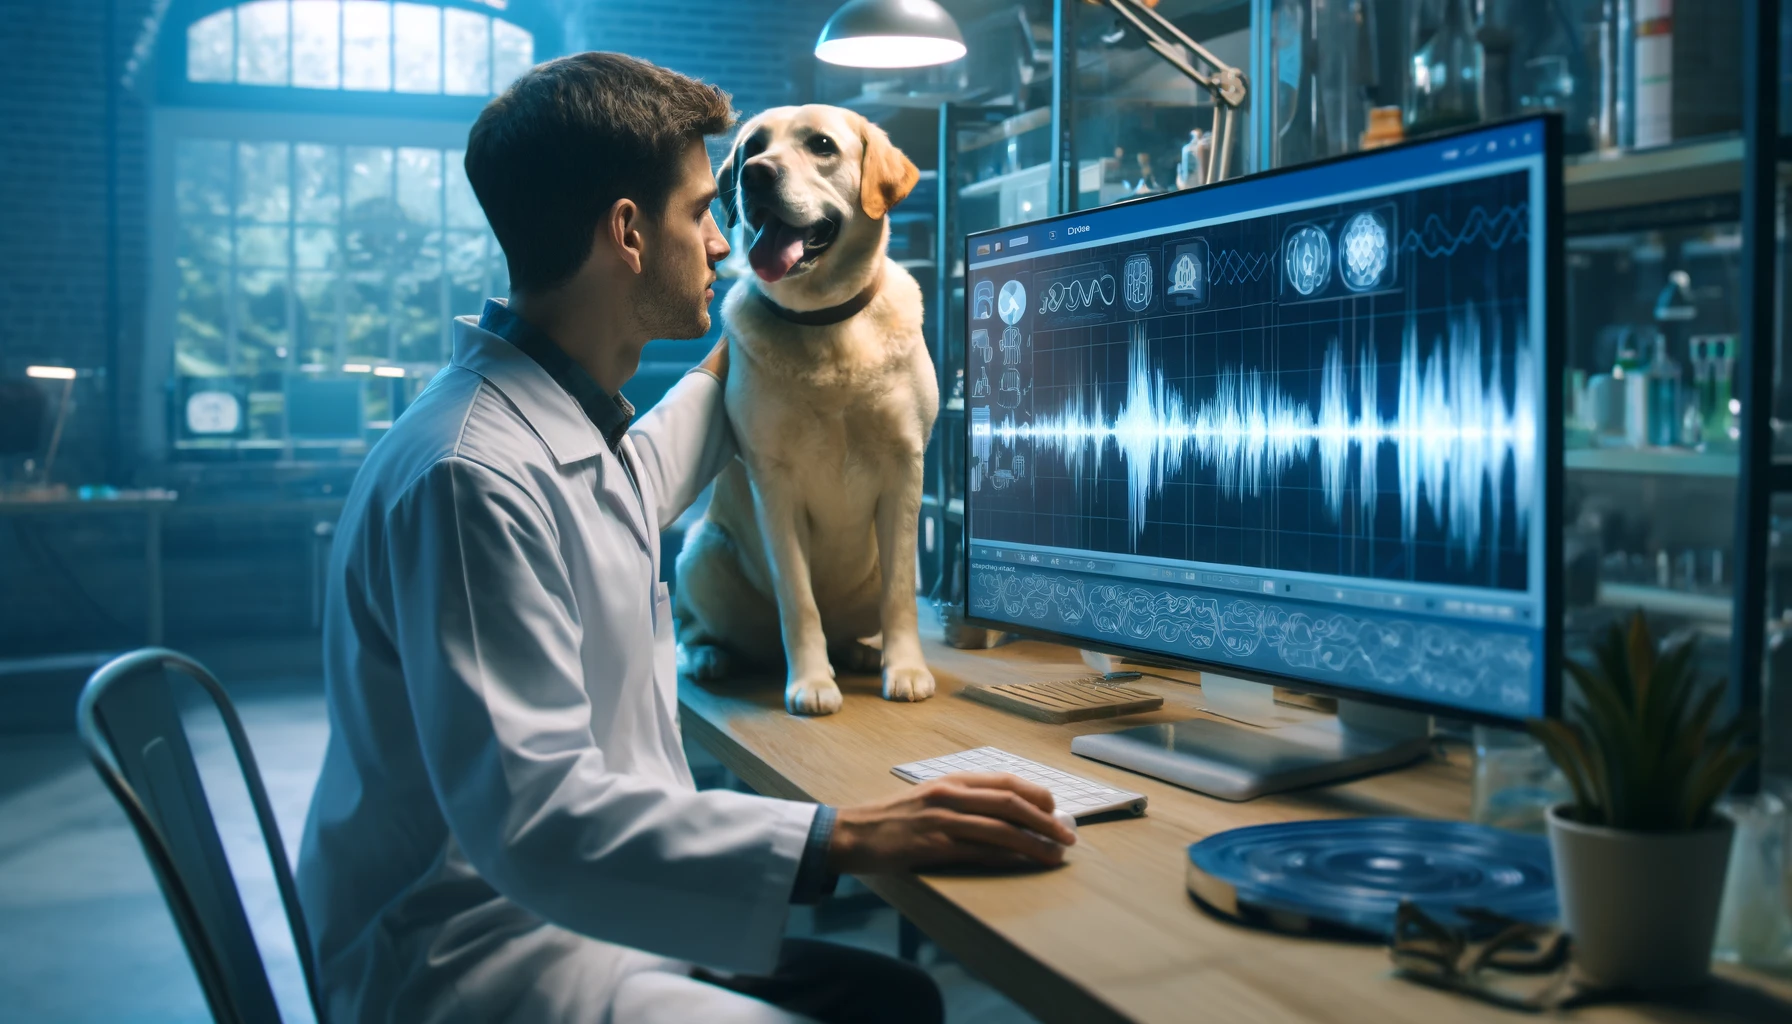 using AI technology to study and interpret dog vocalizations: